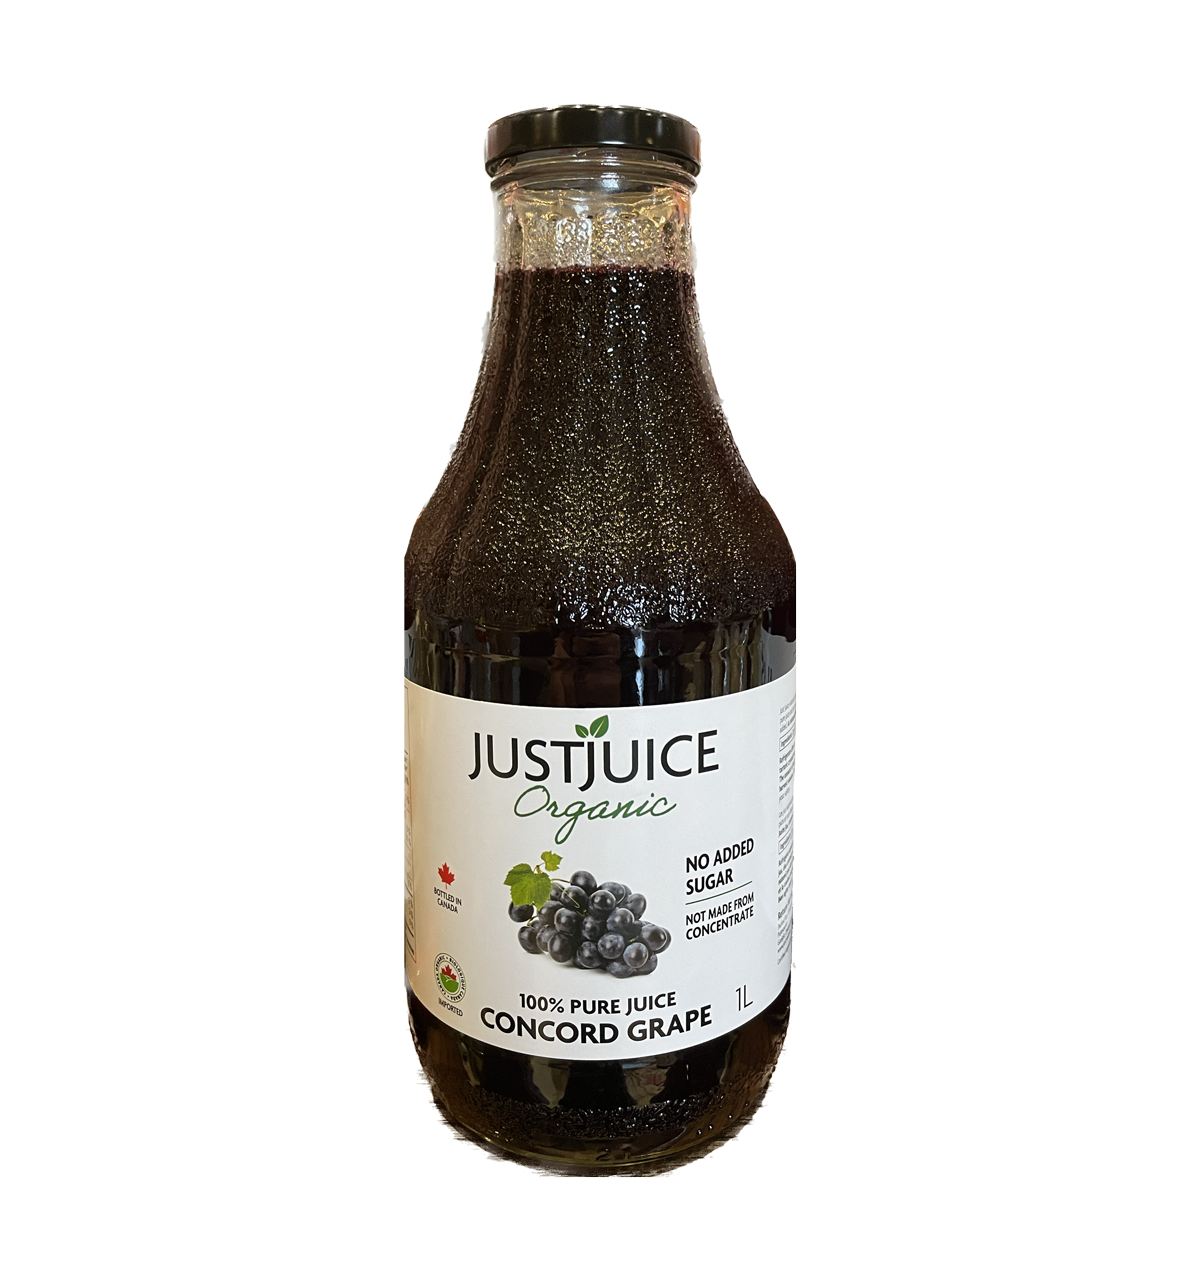 Just Juice Concord Grape Organic 1L